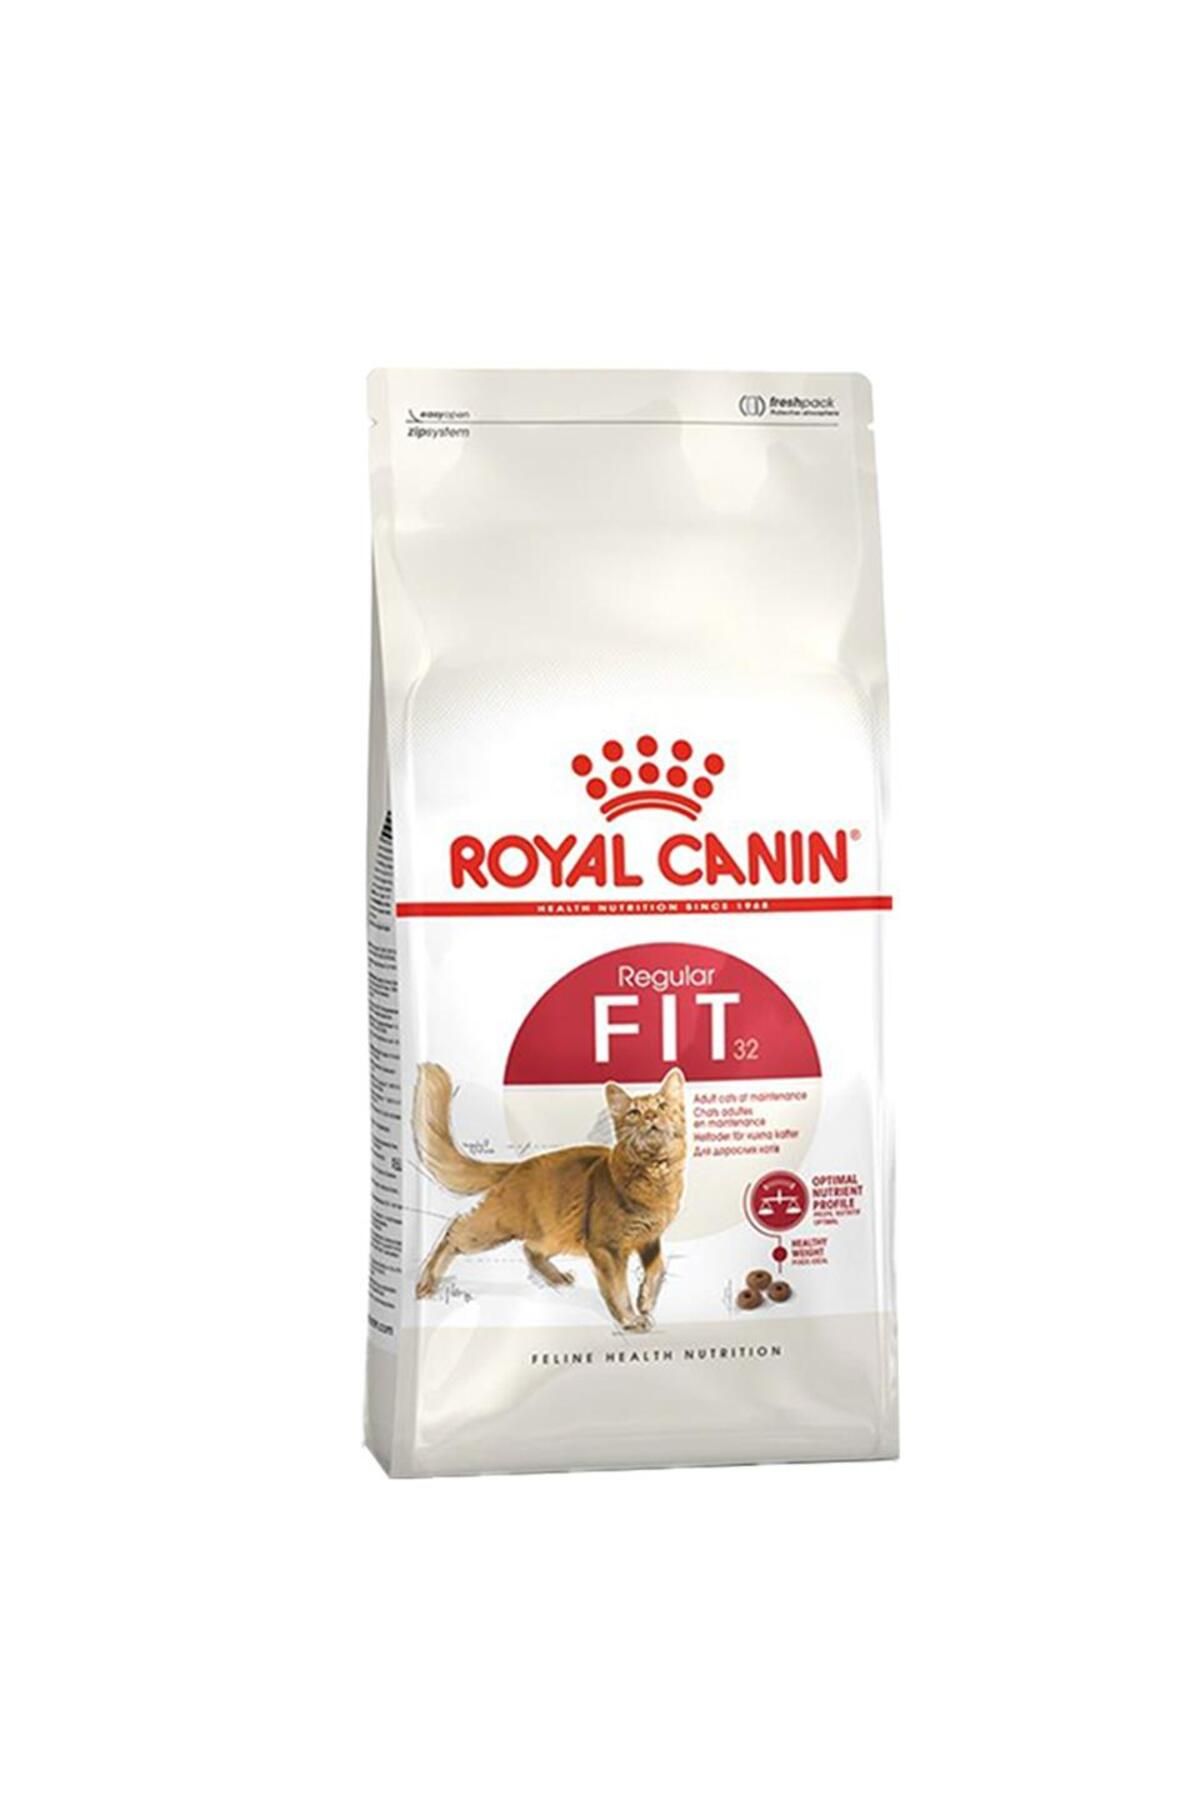 Royal Canin Cat Fit 32 Kedi Maması 4 Kg